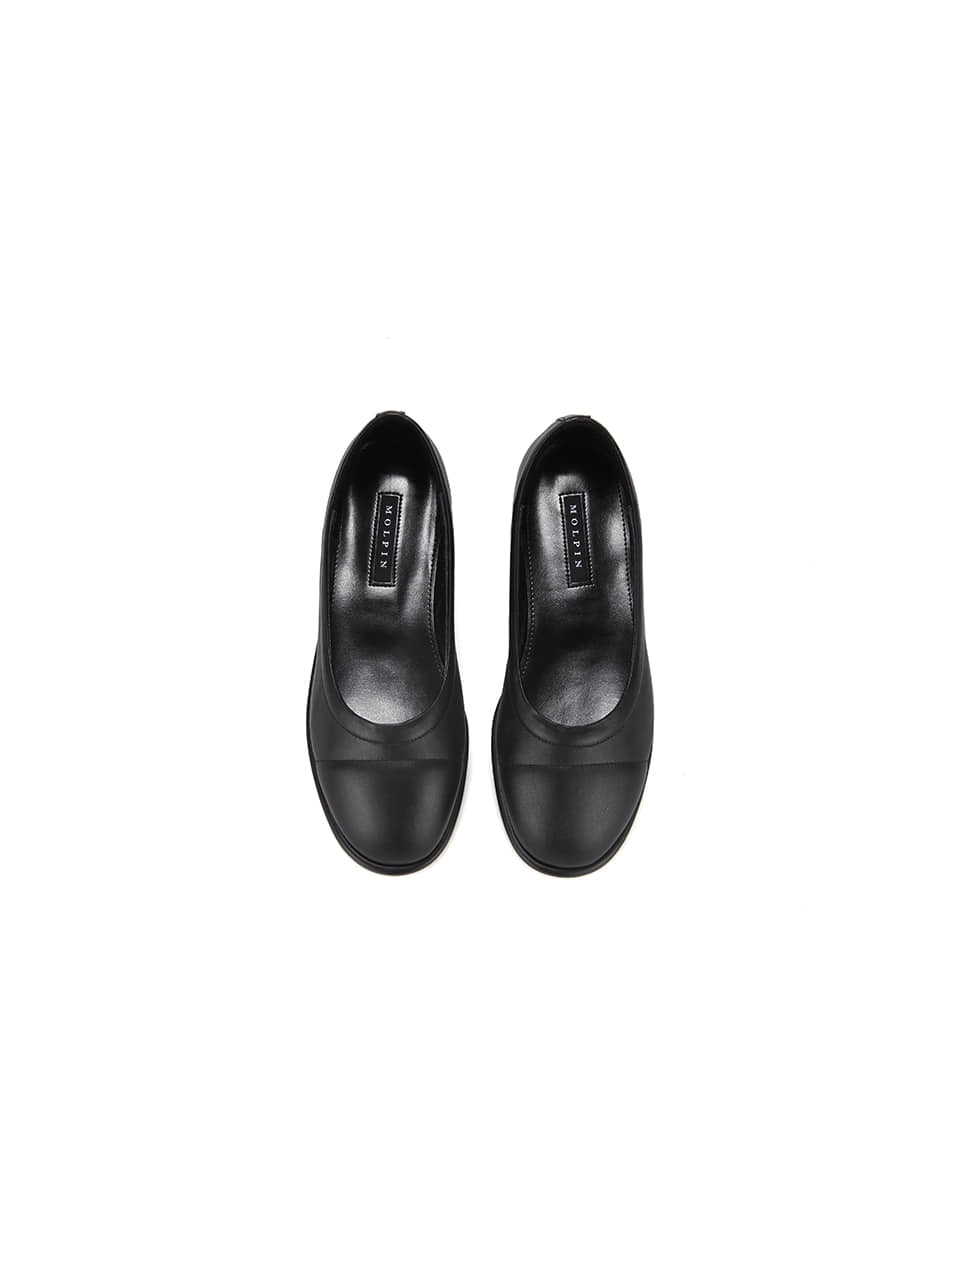 Round Flat Shoes_21501_black